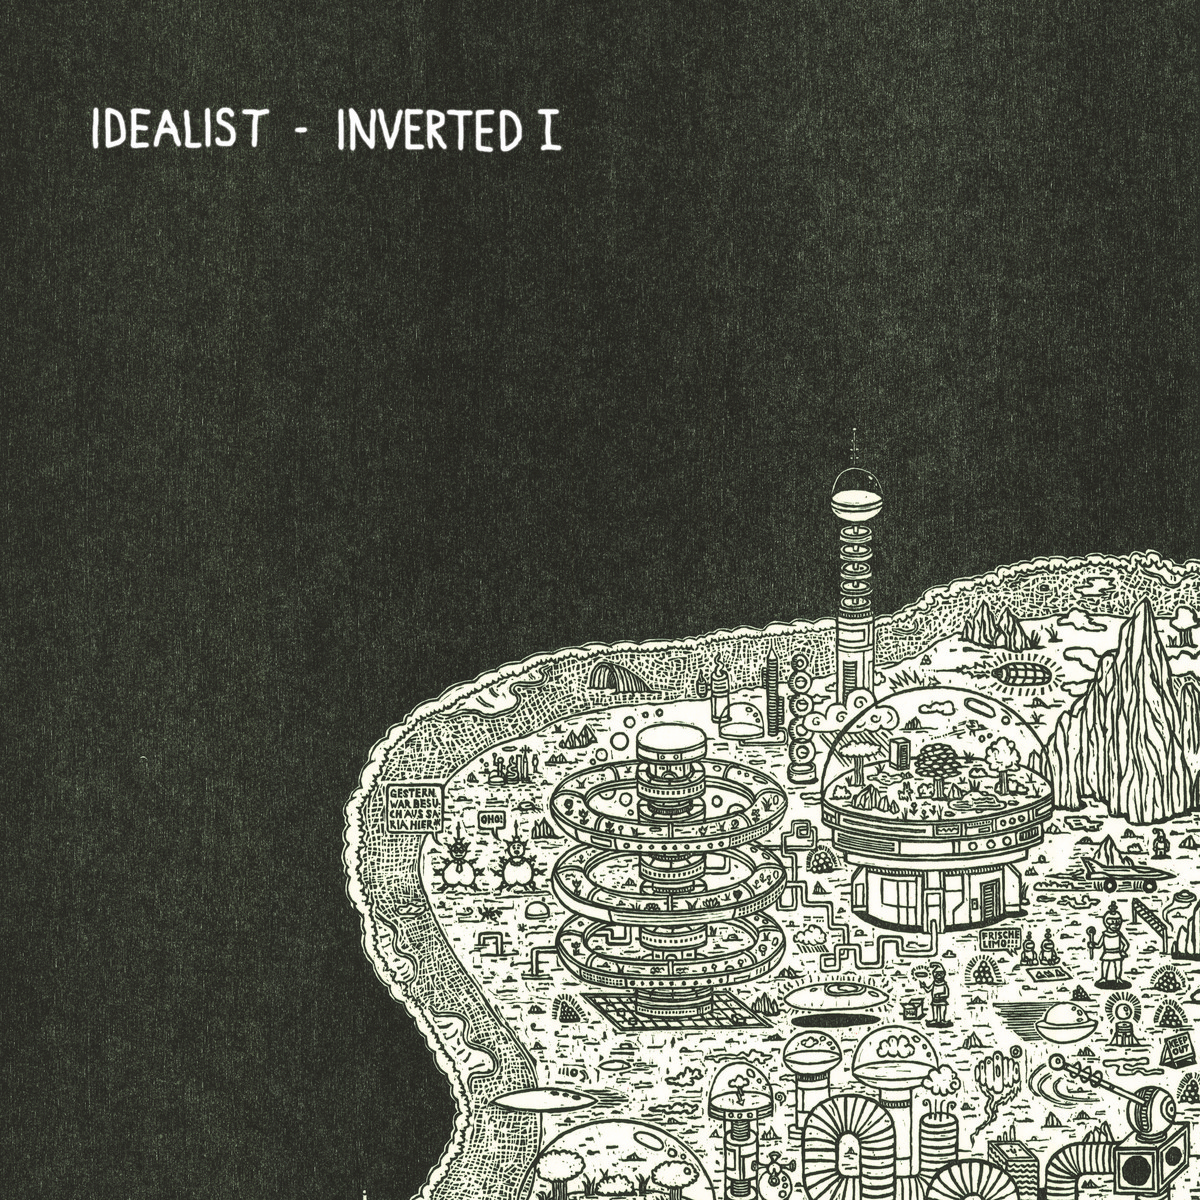 Idealist - Inverted I